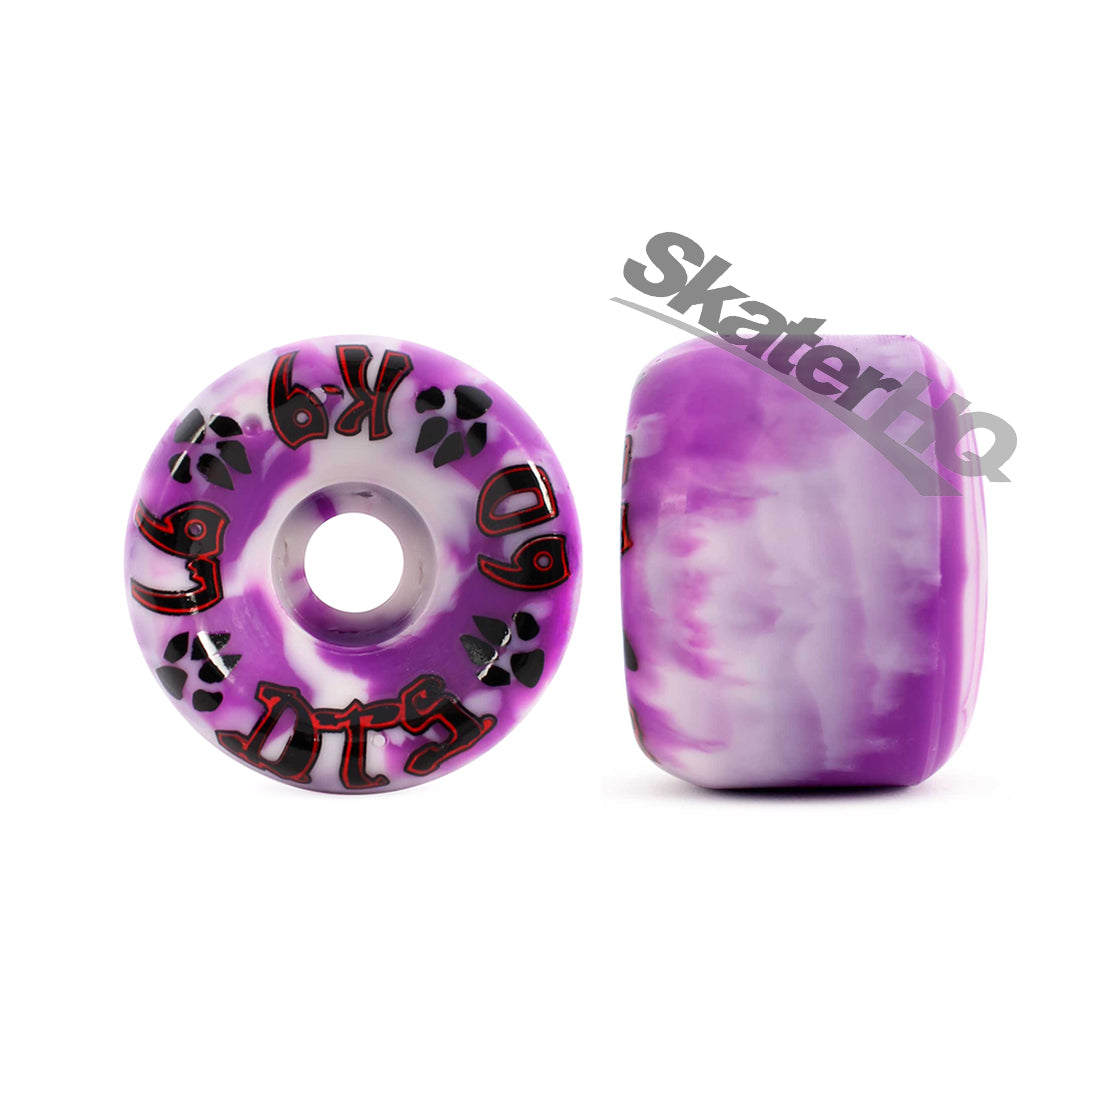 Dogtown K-9 60mm 97a 4pk - Purple/White Swirl Skateboard Wheels